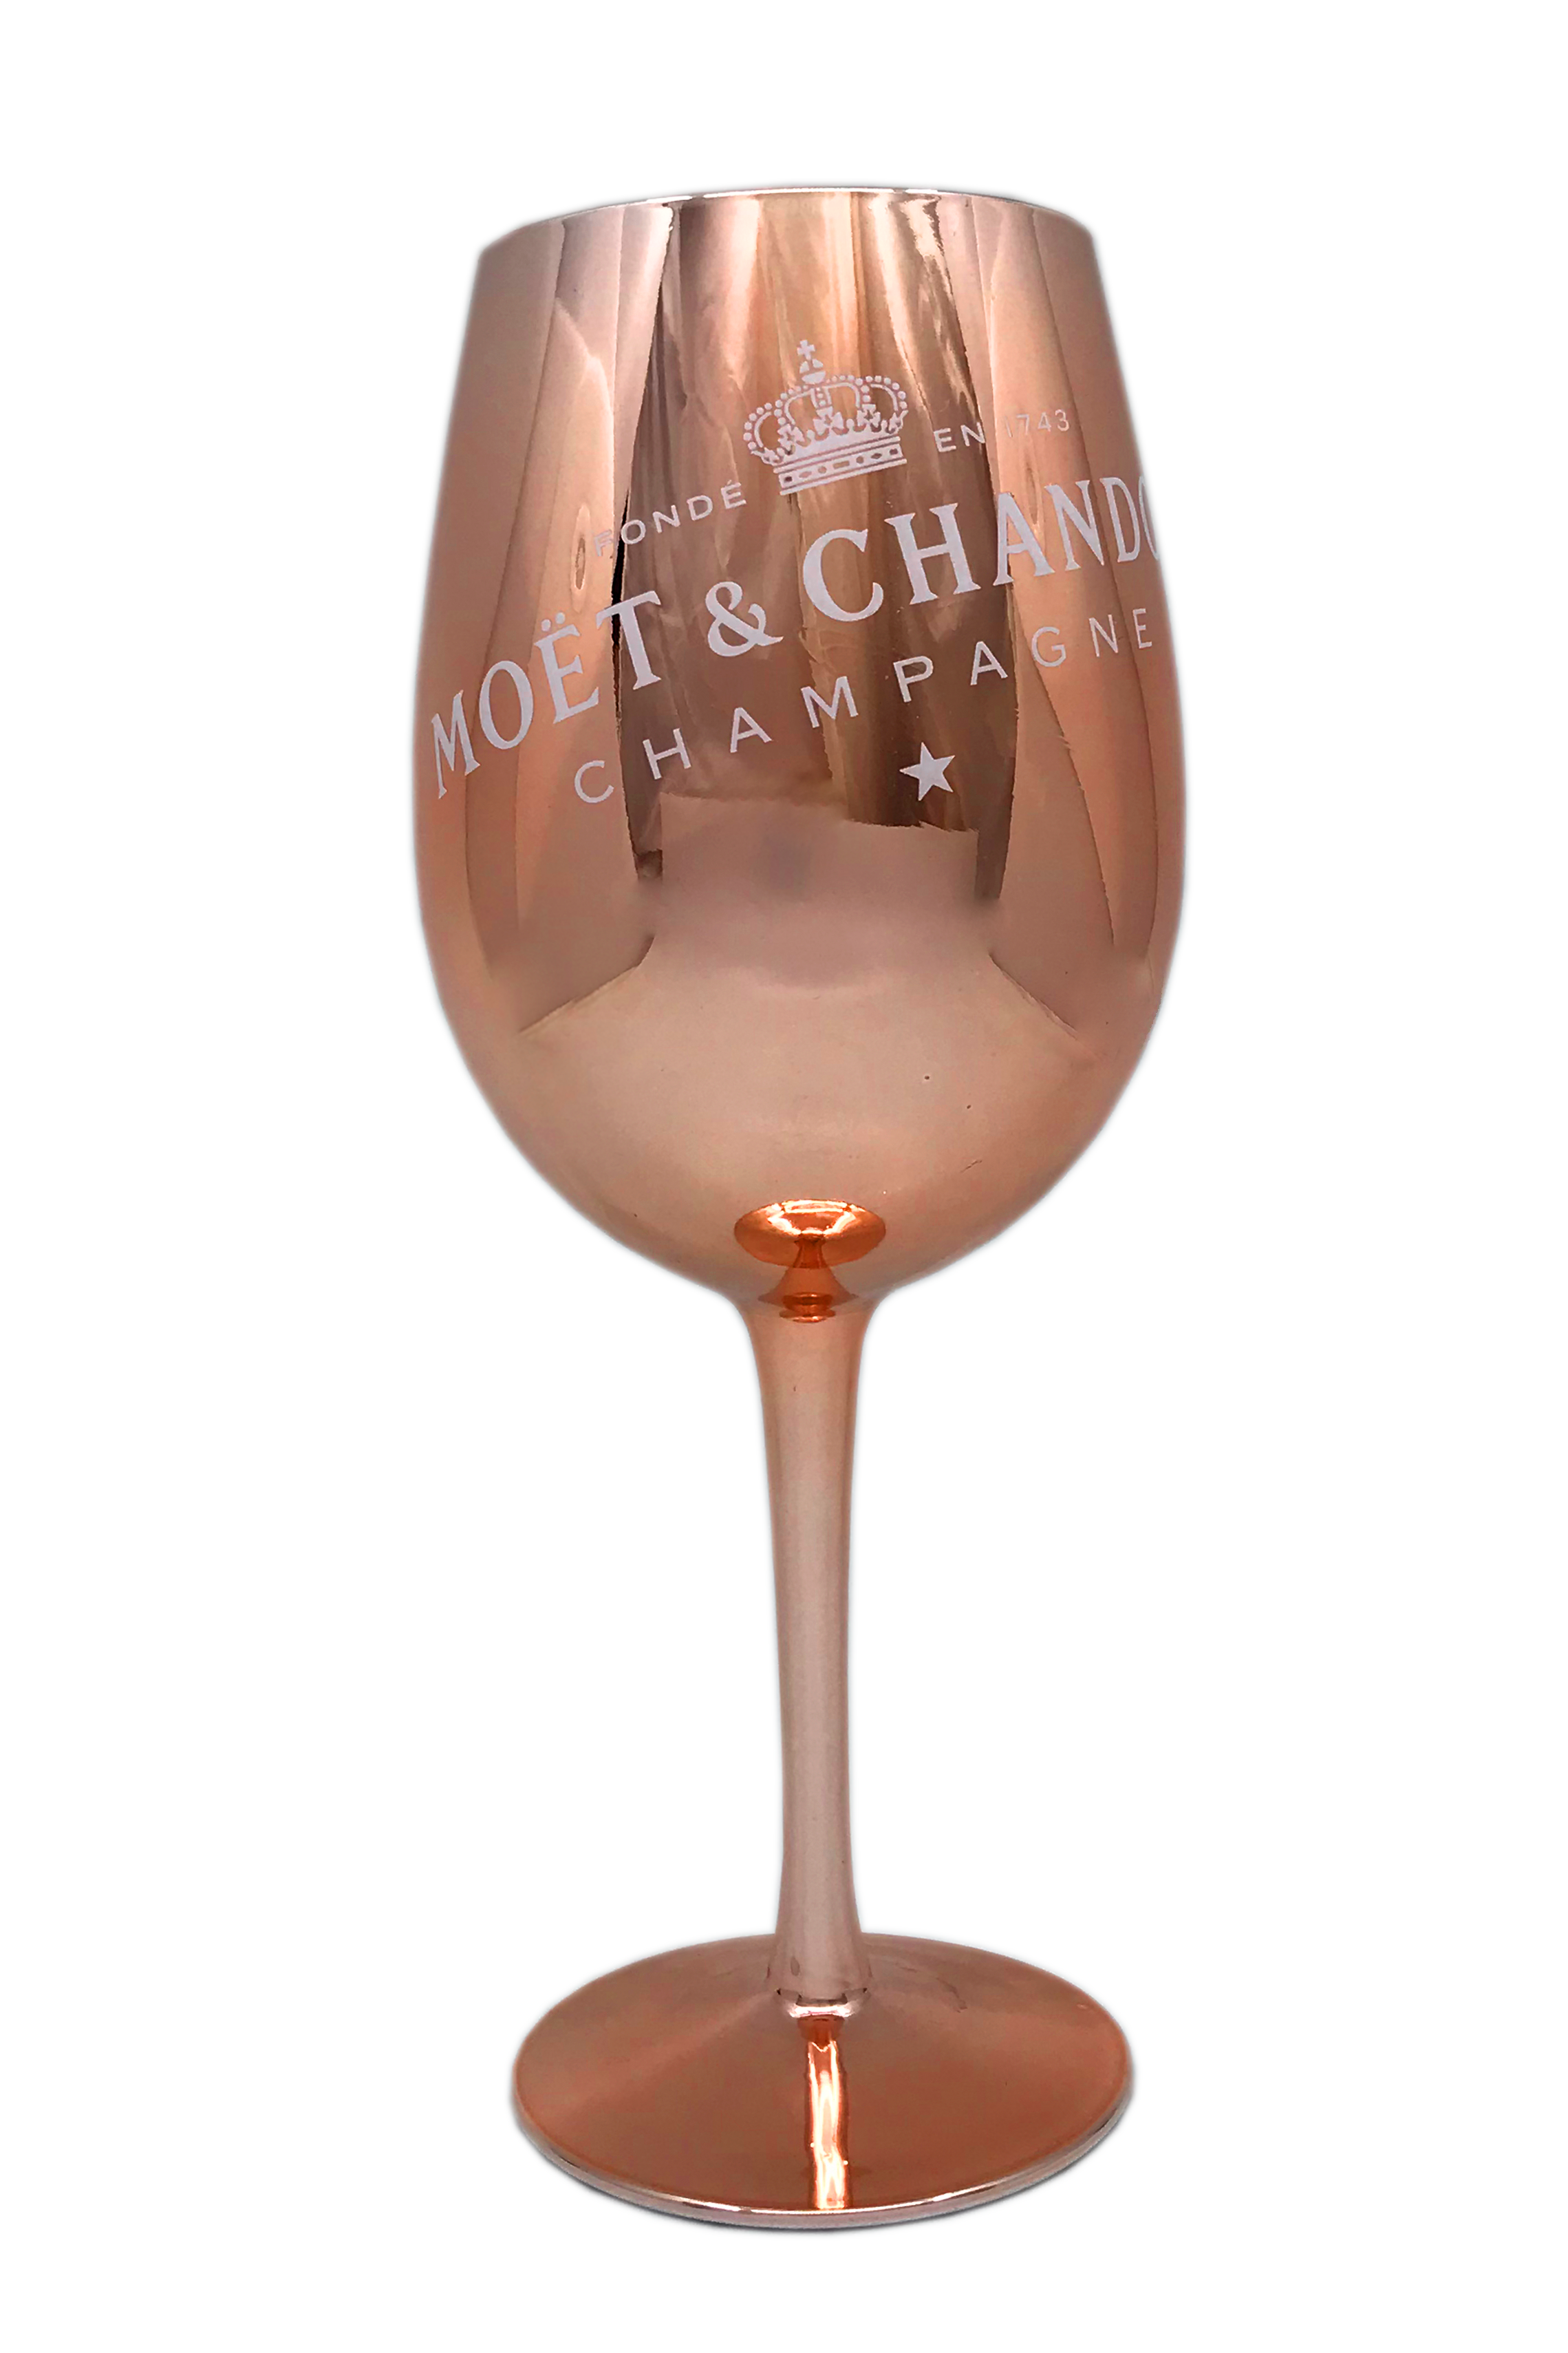 Moët & Chandon Champagnerglas Acrylglas Kupfer - Limited Collectors Edition 0,45l